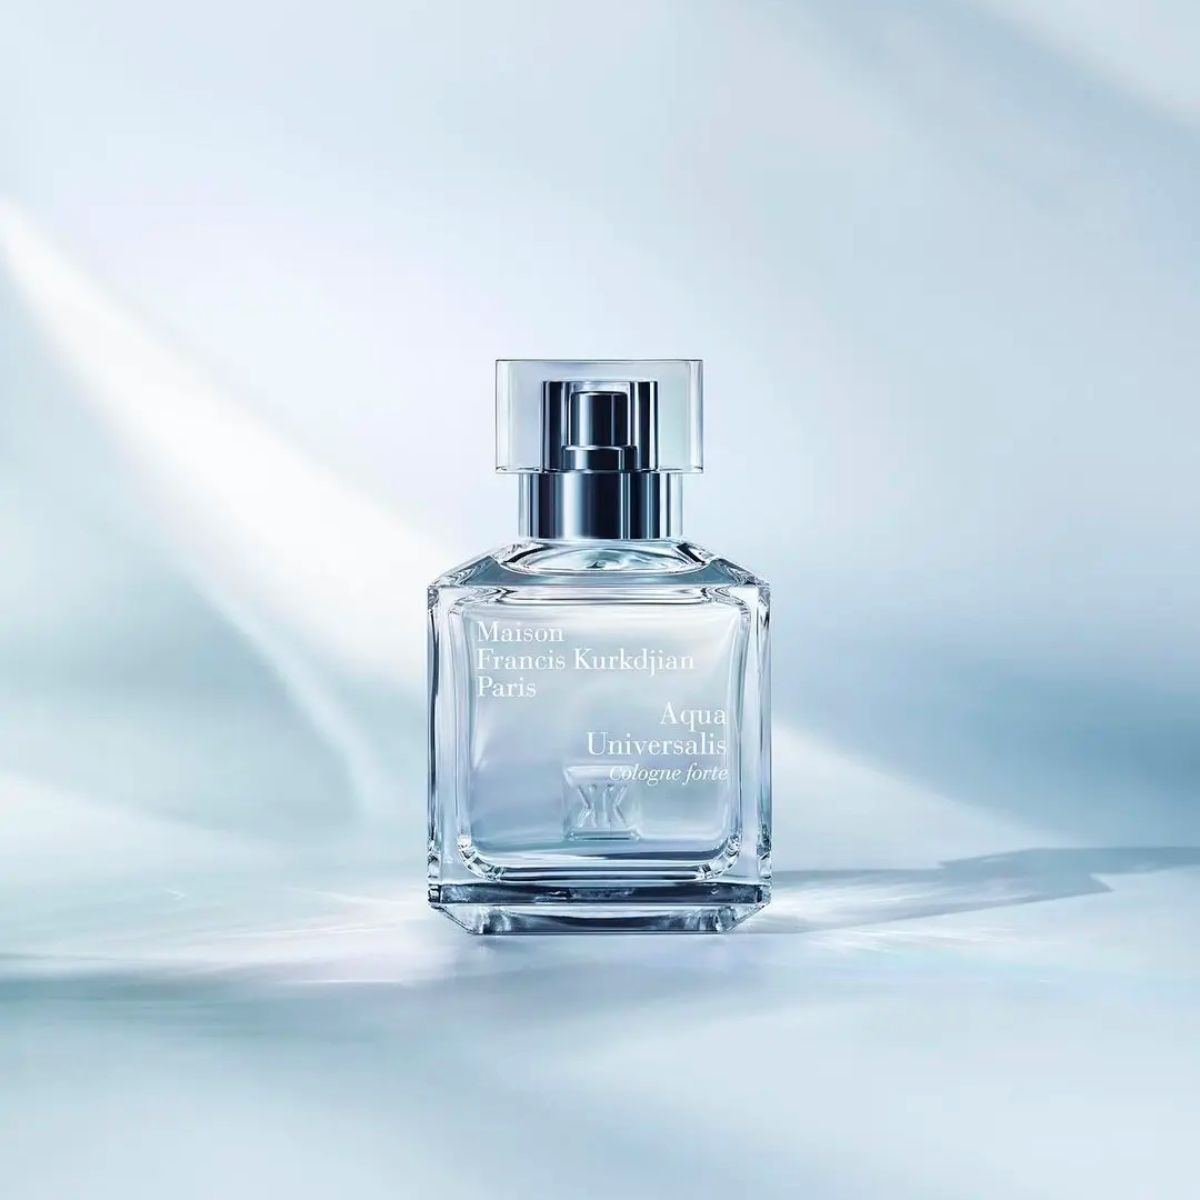 Image of Aqua Universalis Cologne Forte by the perfume brand Maison Francis Kurkdjian